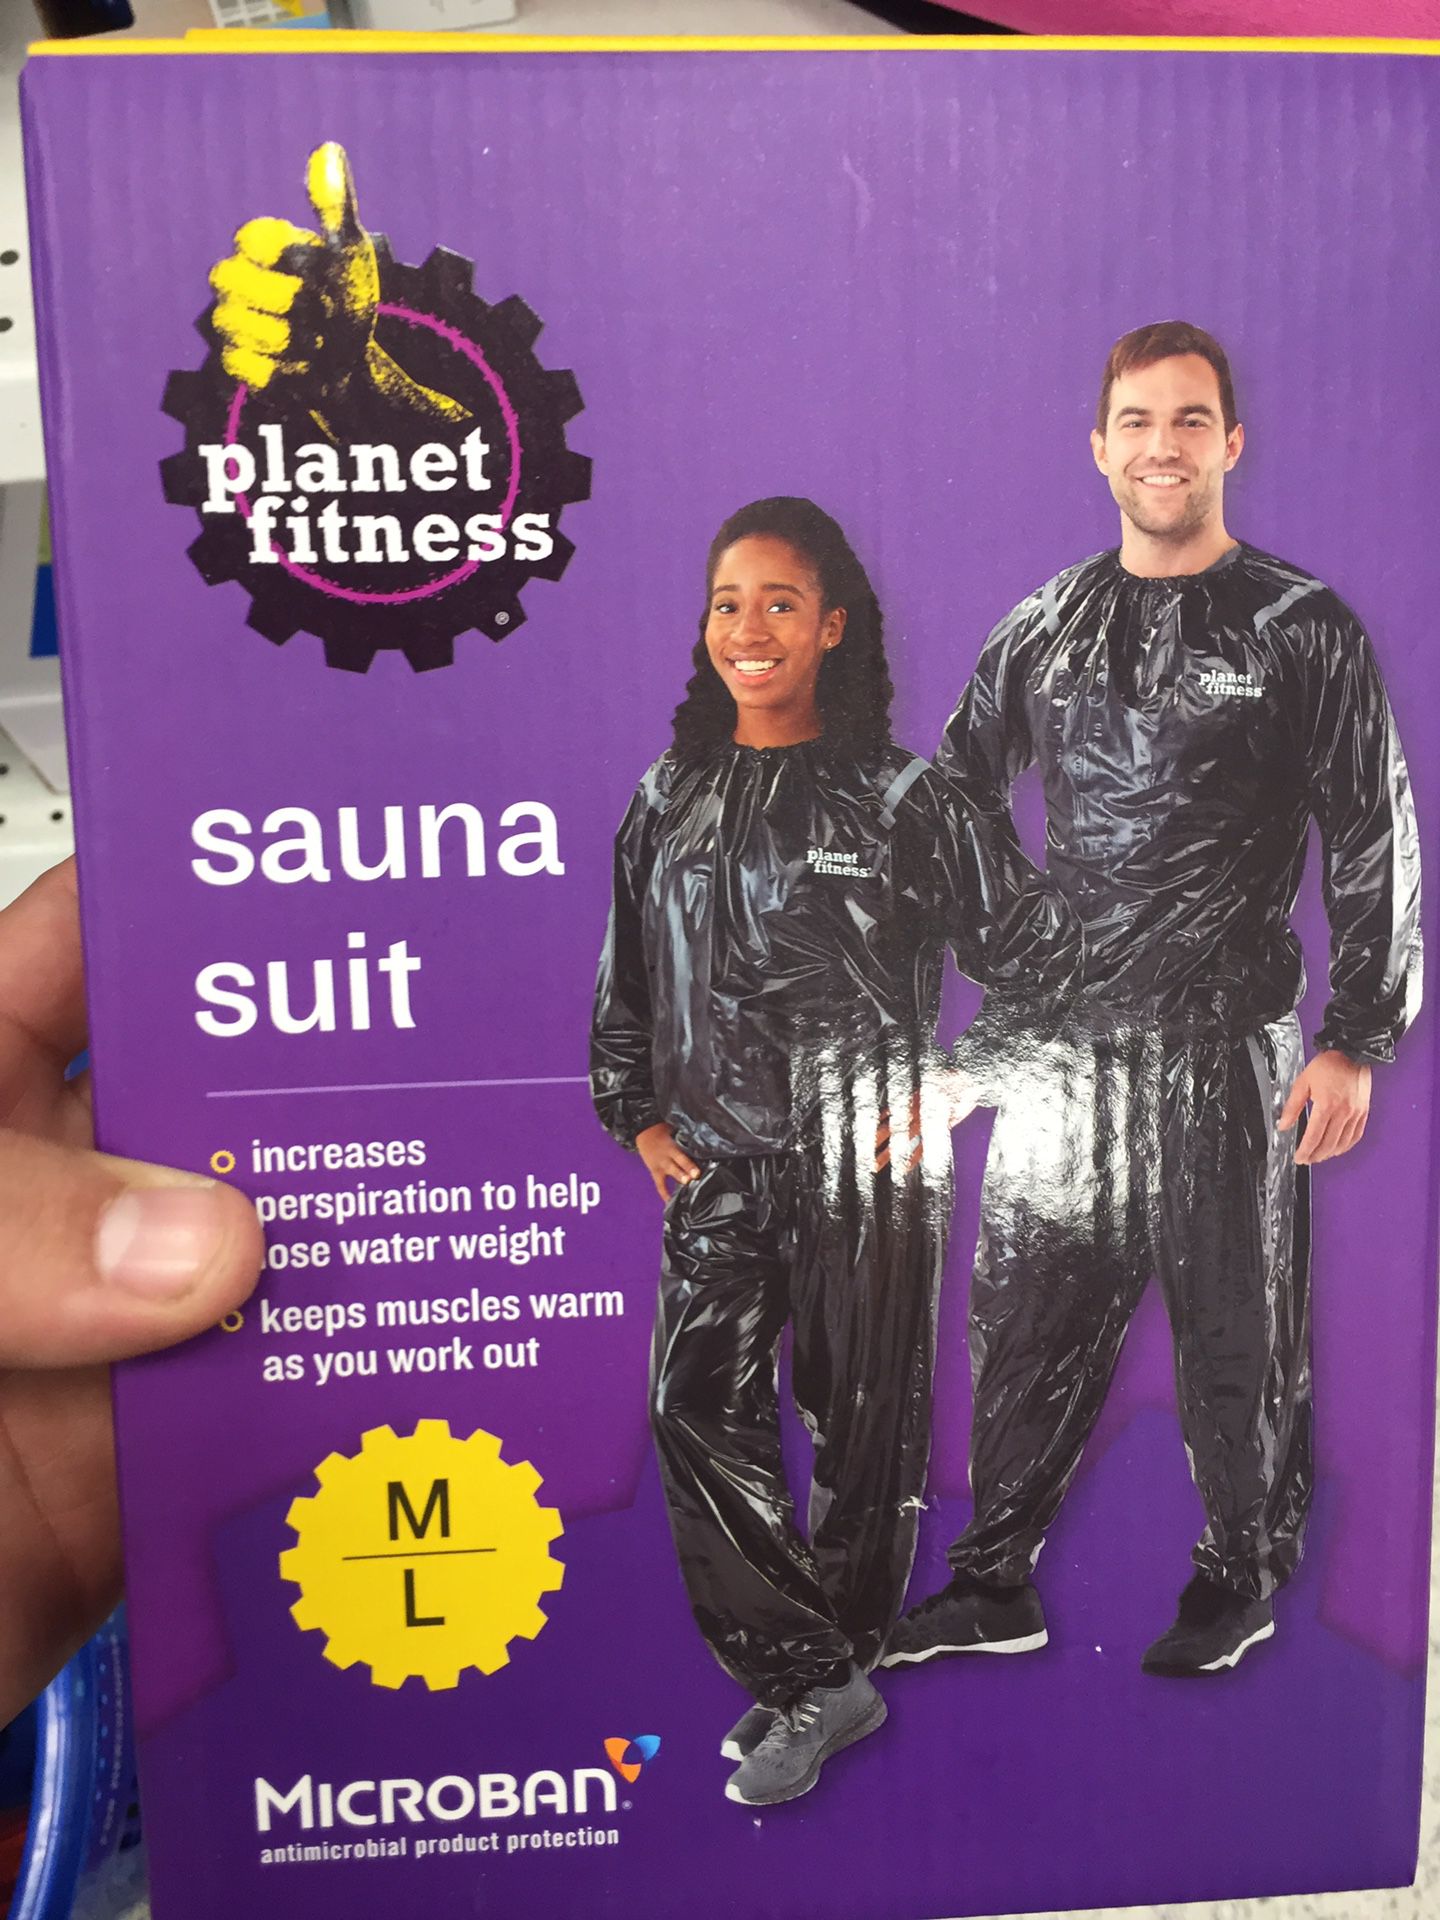 Planet fitness Sauna Suit